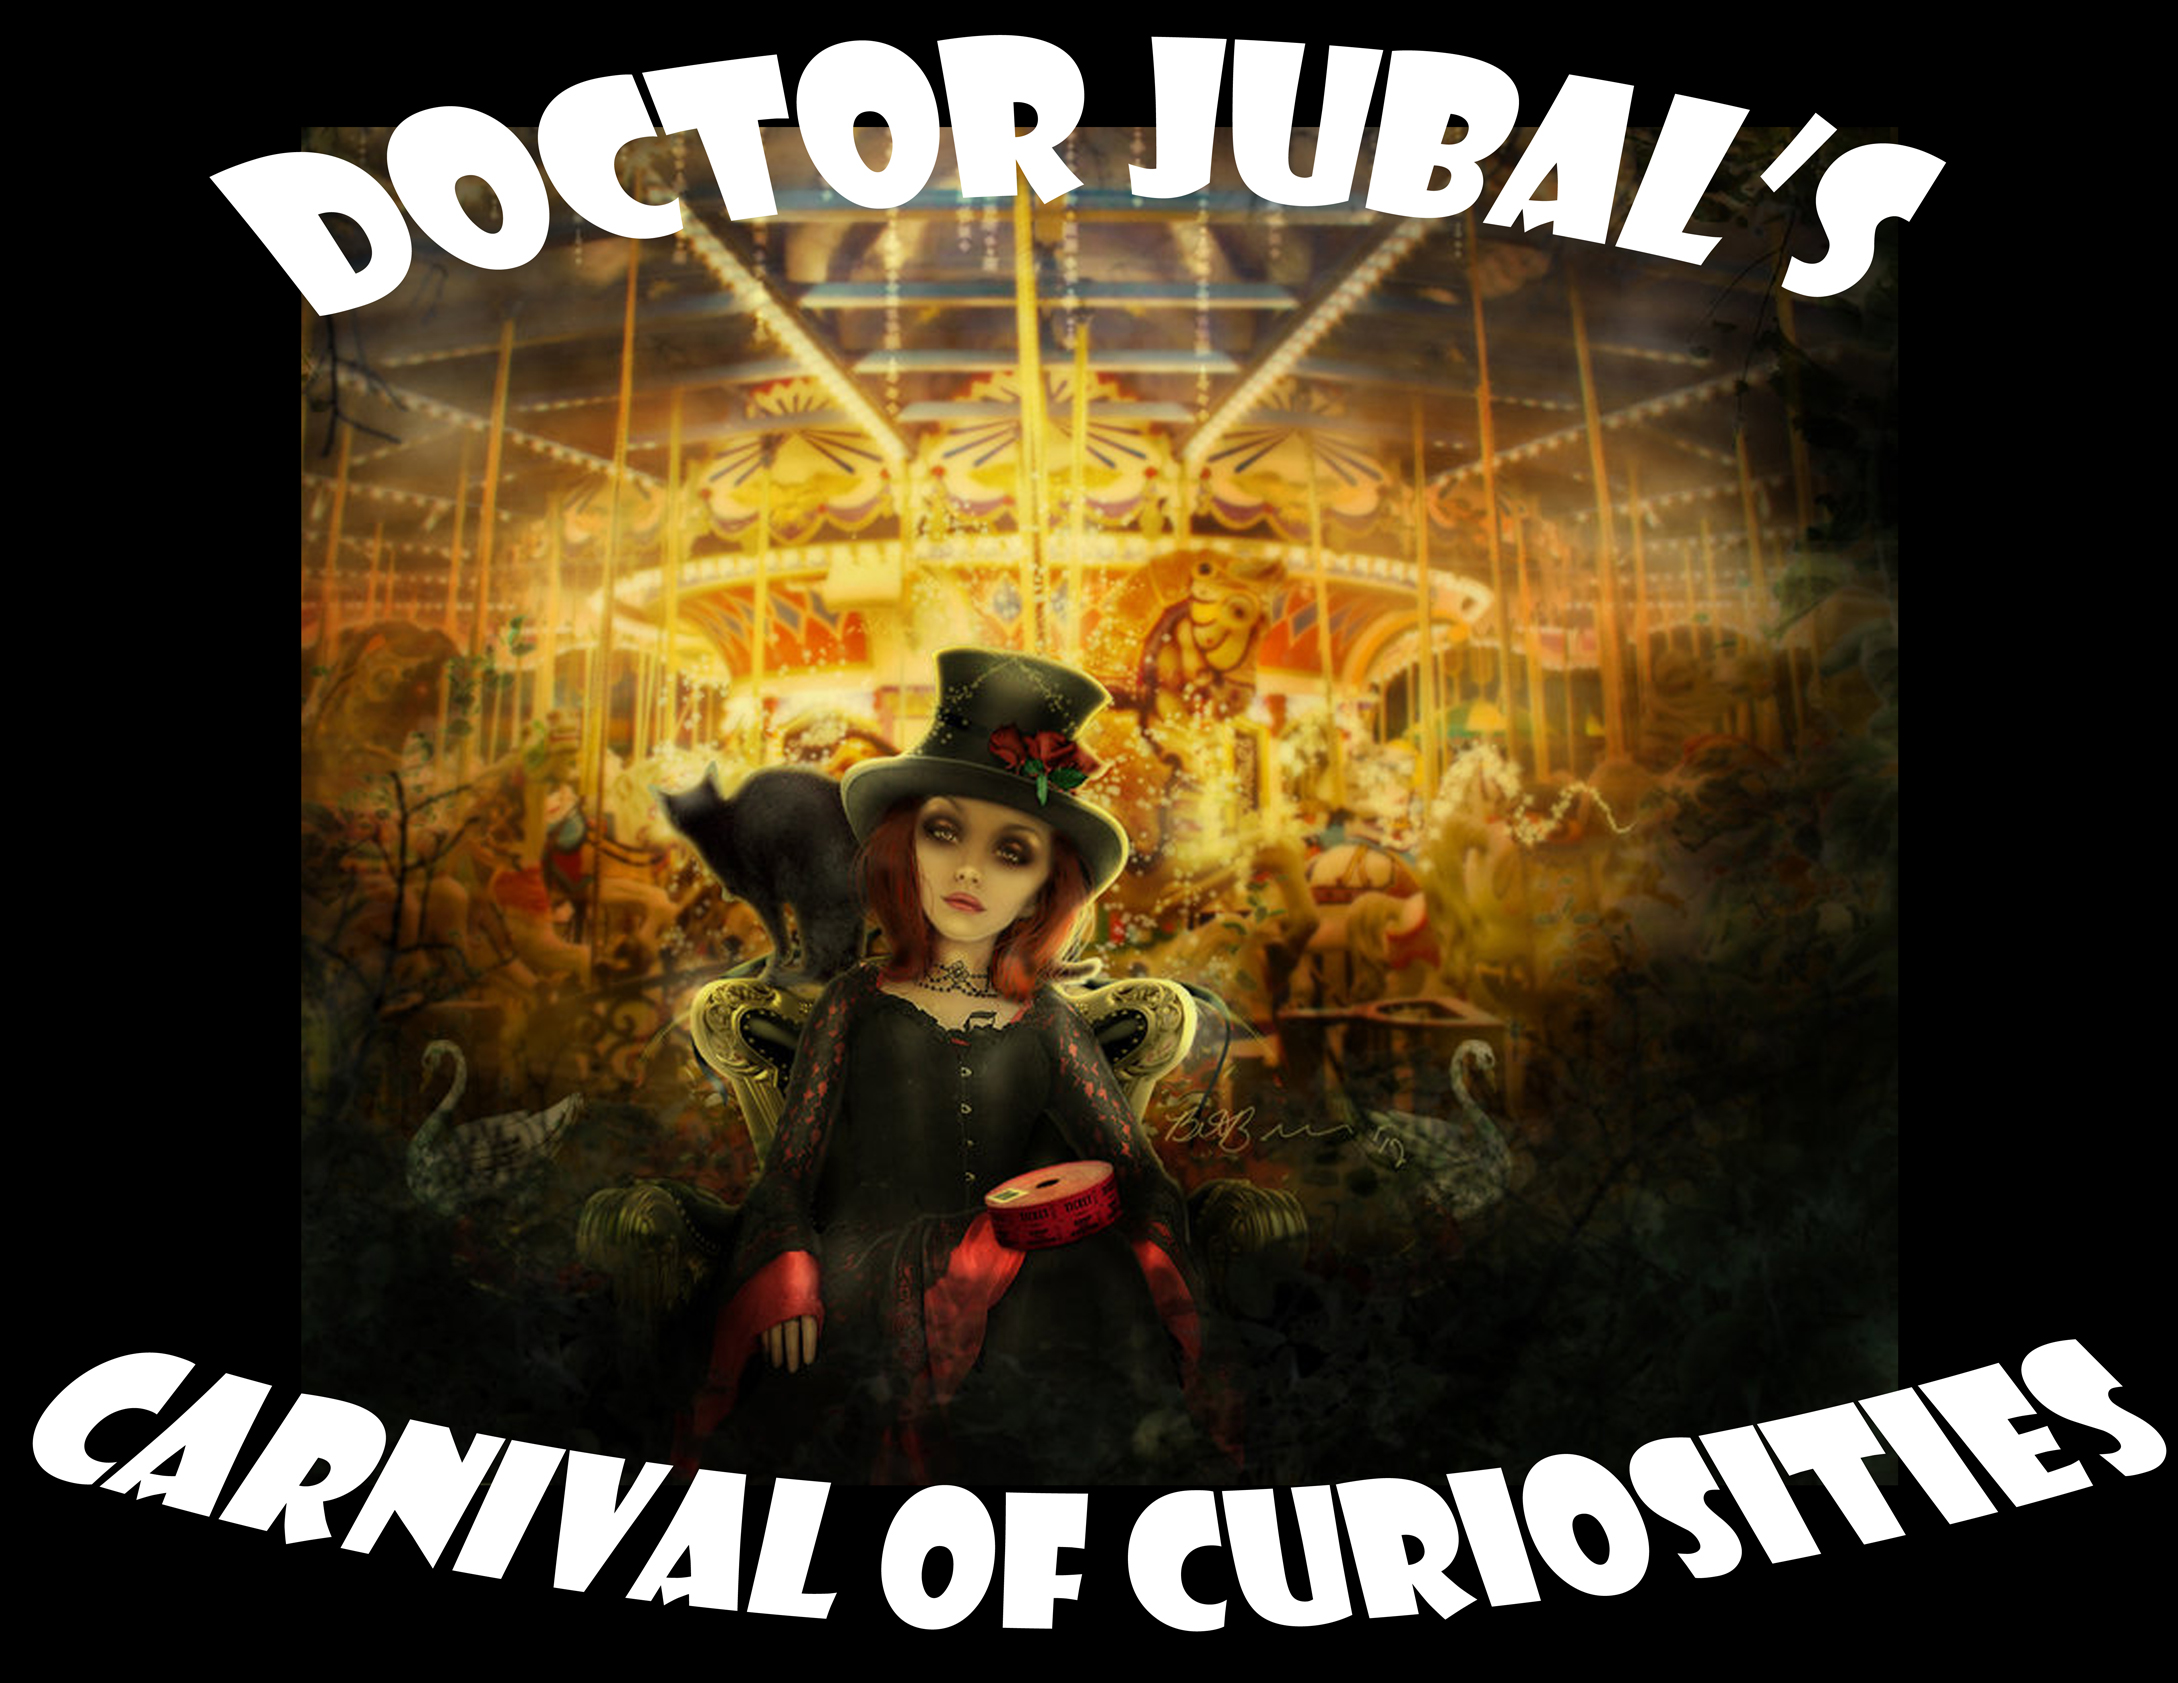 Dr. Jubal’s Carnival of Curiosities